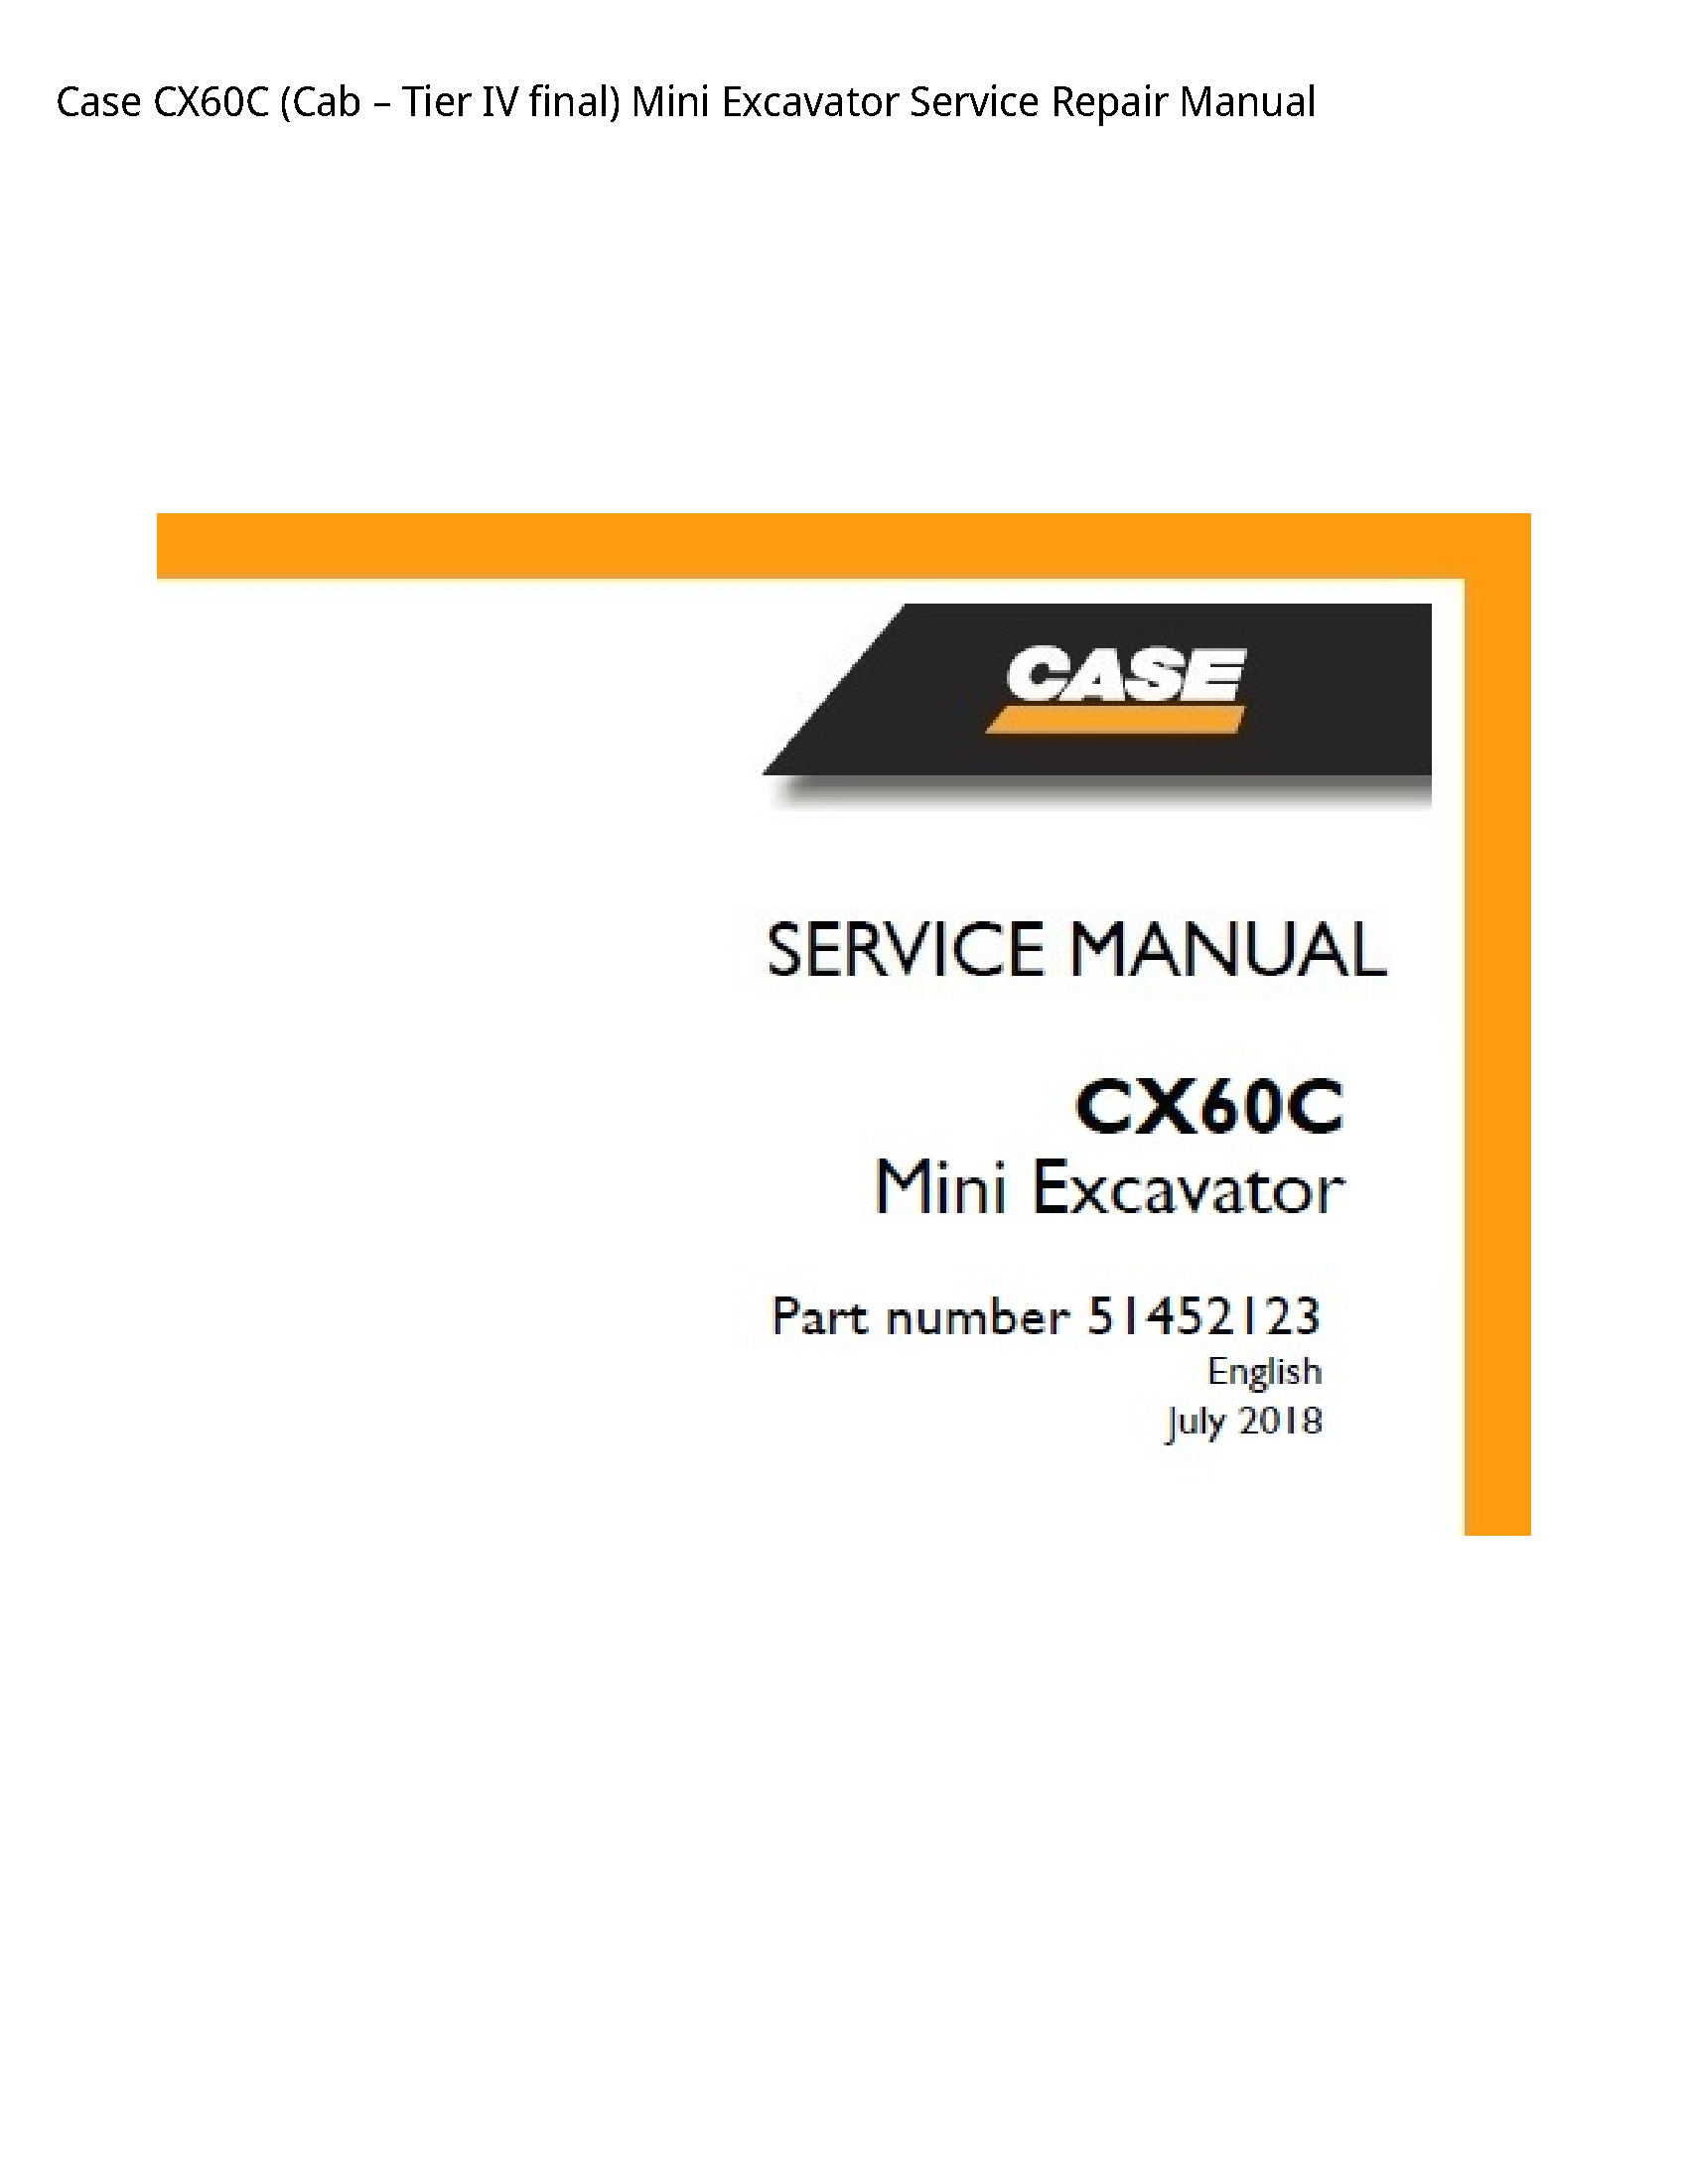 Case/Case IH CX60C (Cab Tier IV final) Mini Excavator manual